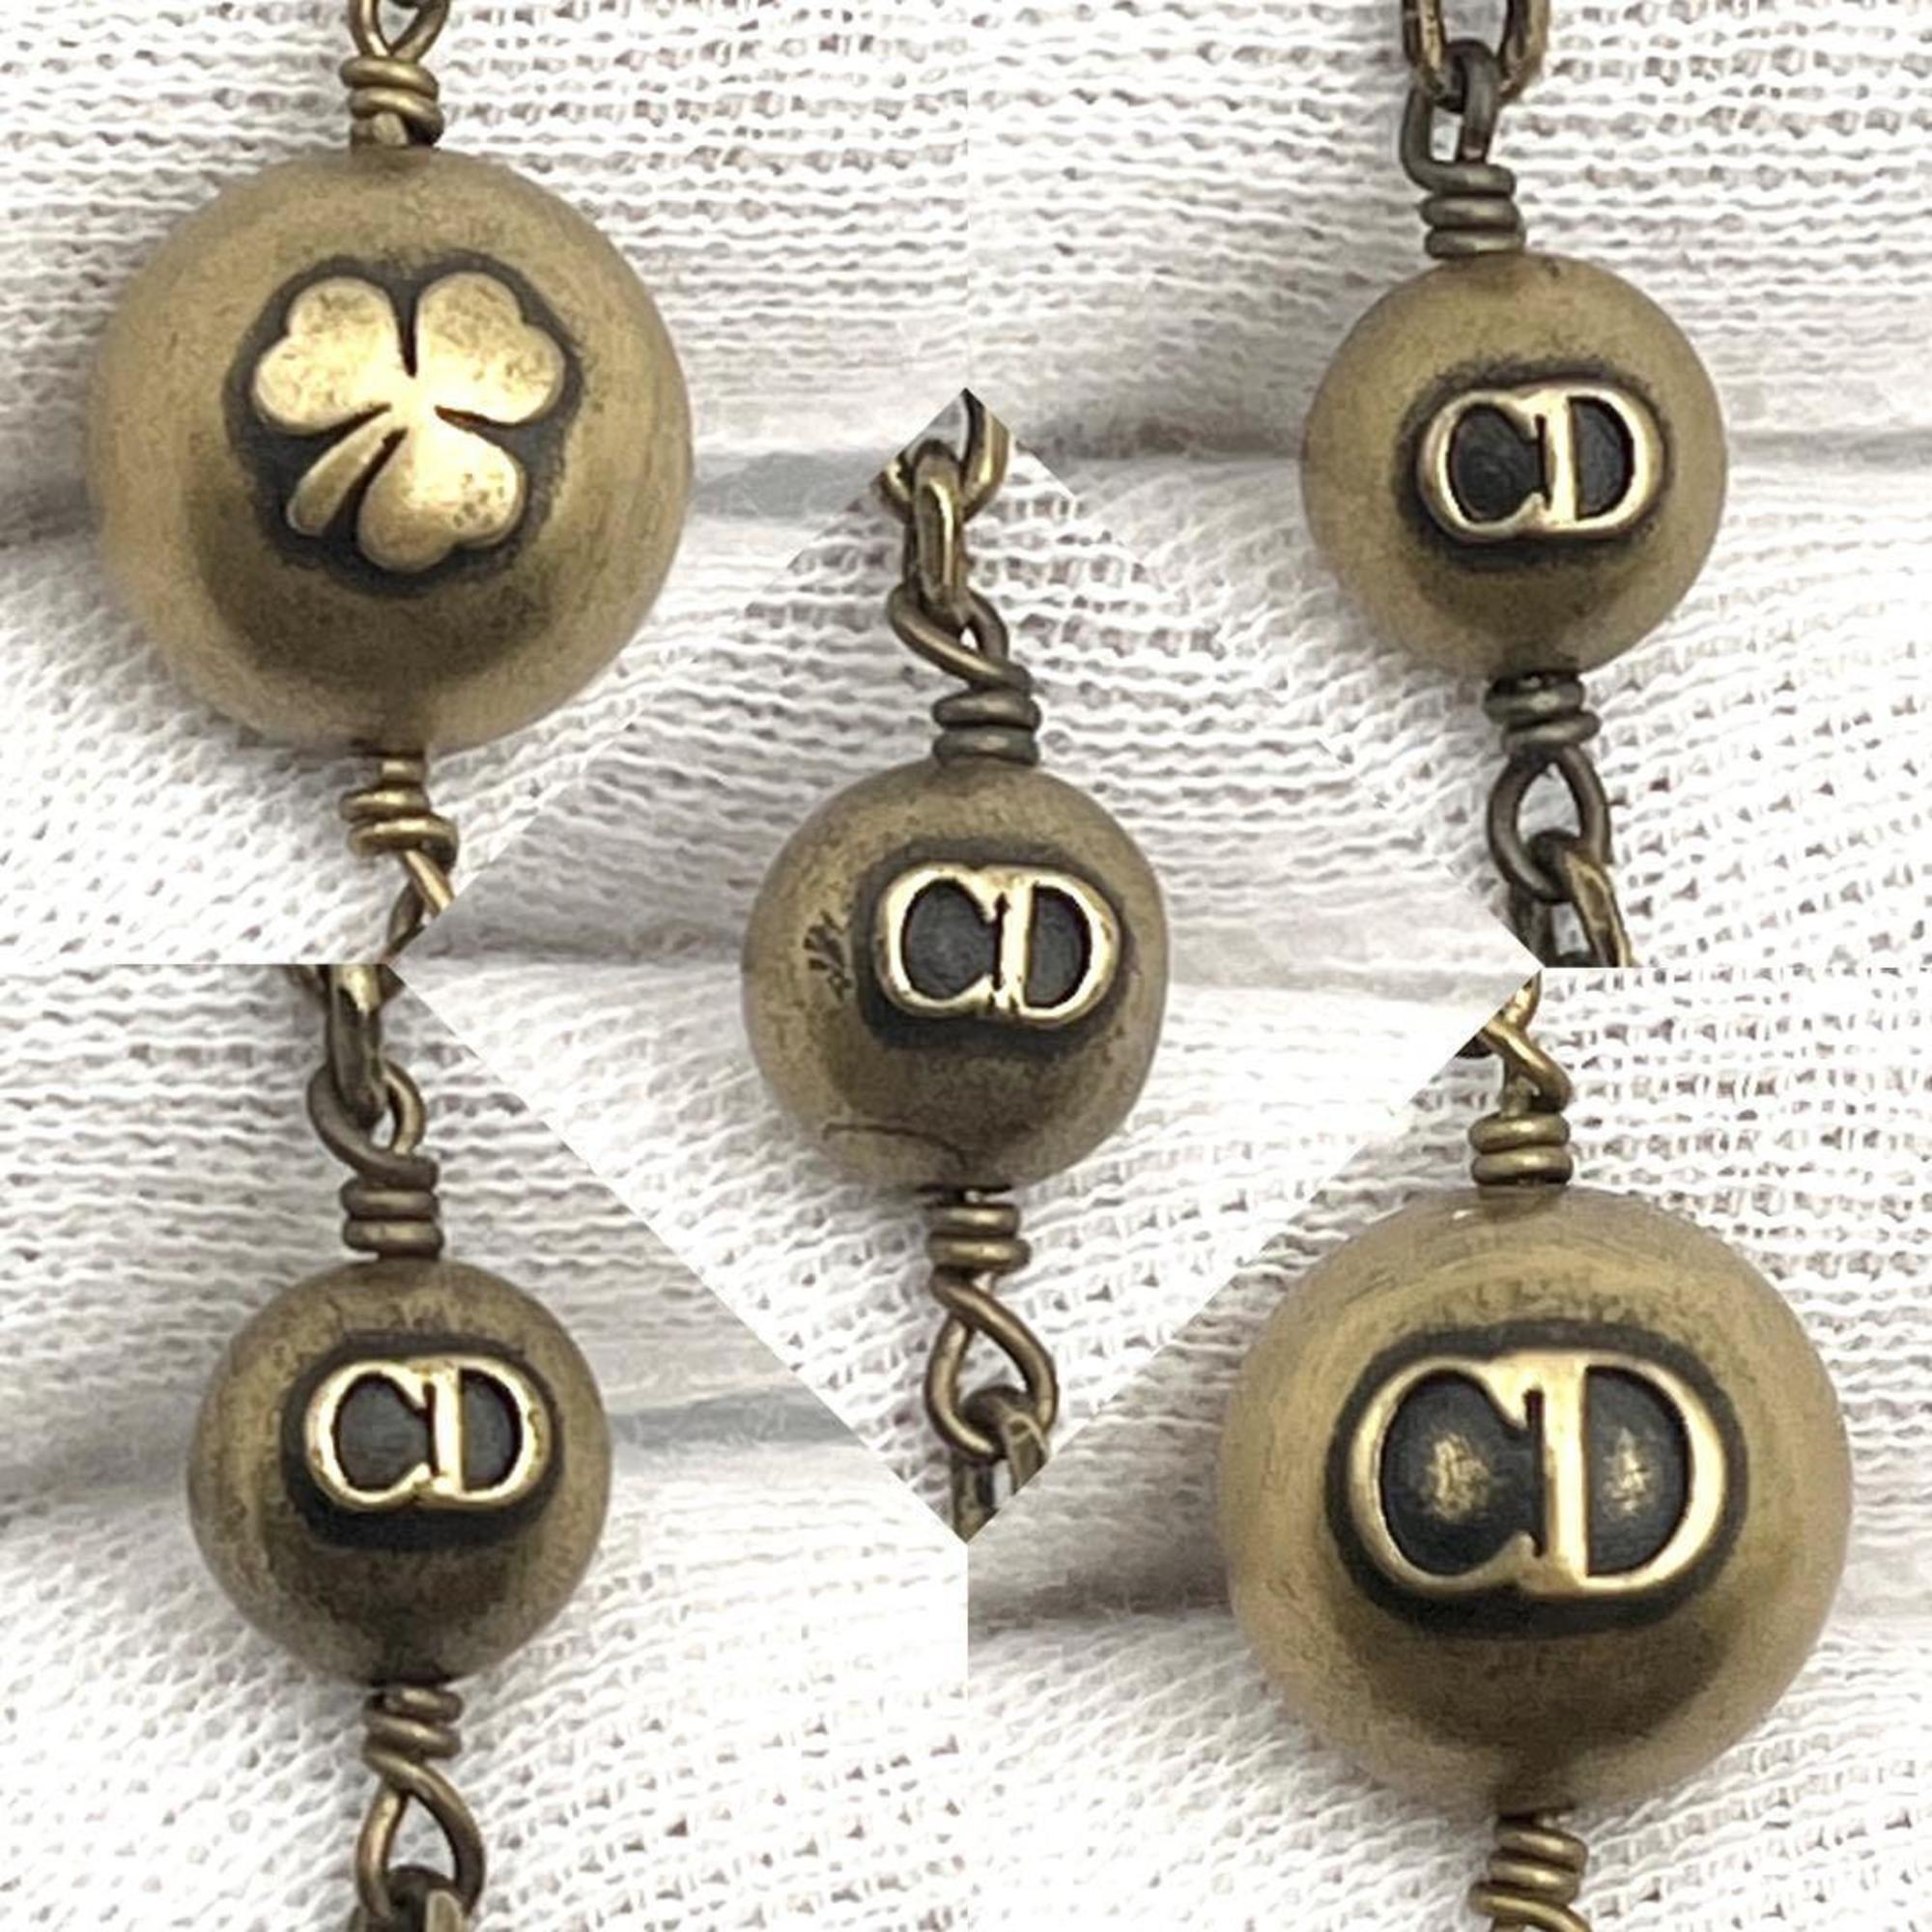 Christian Dior Women's Station Necklace Pendant